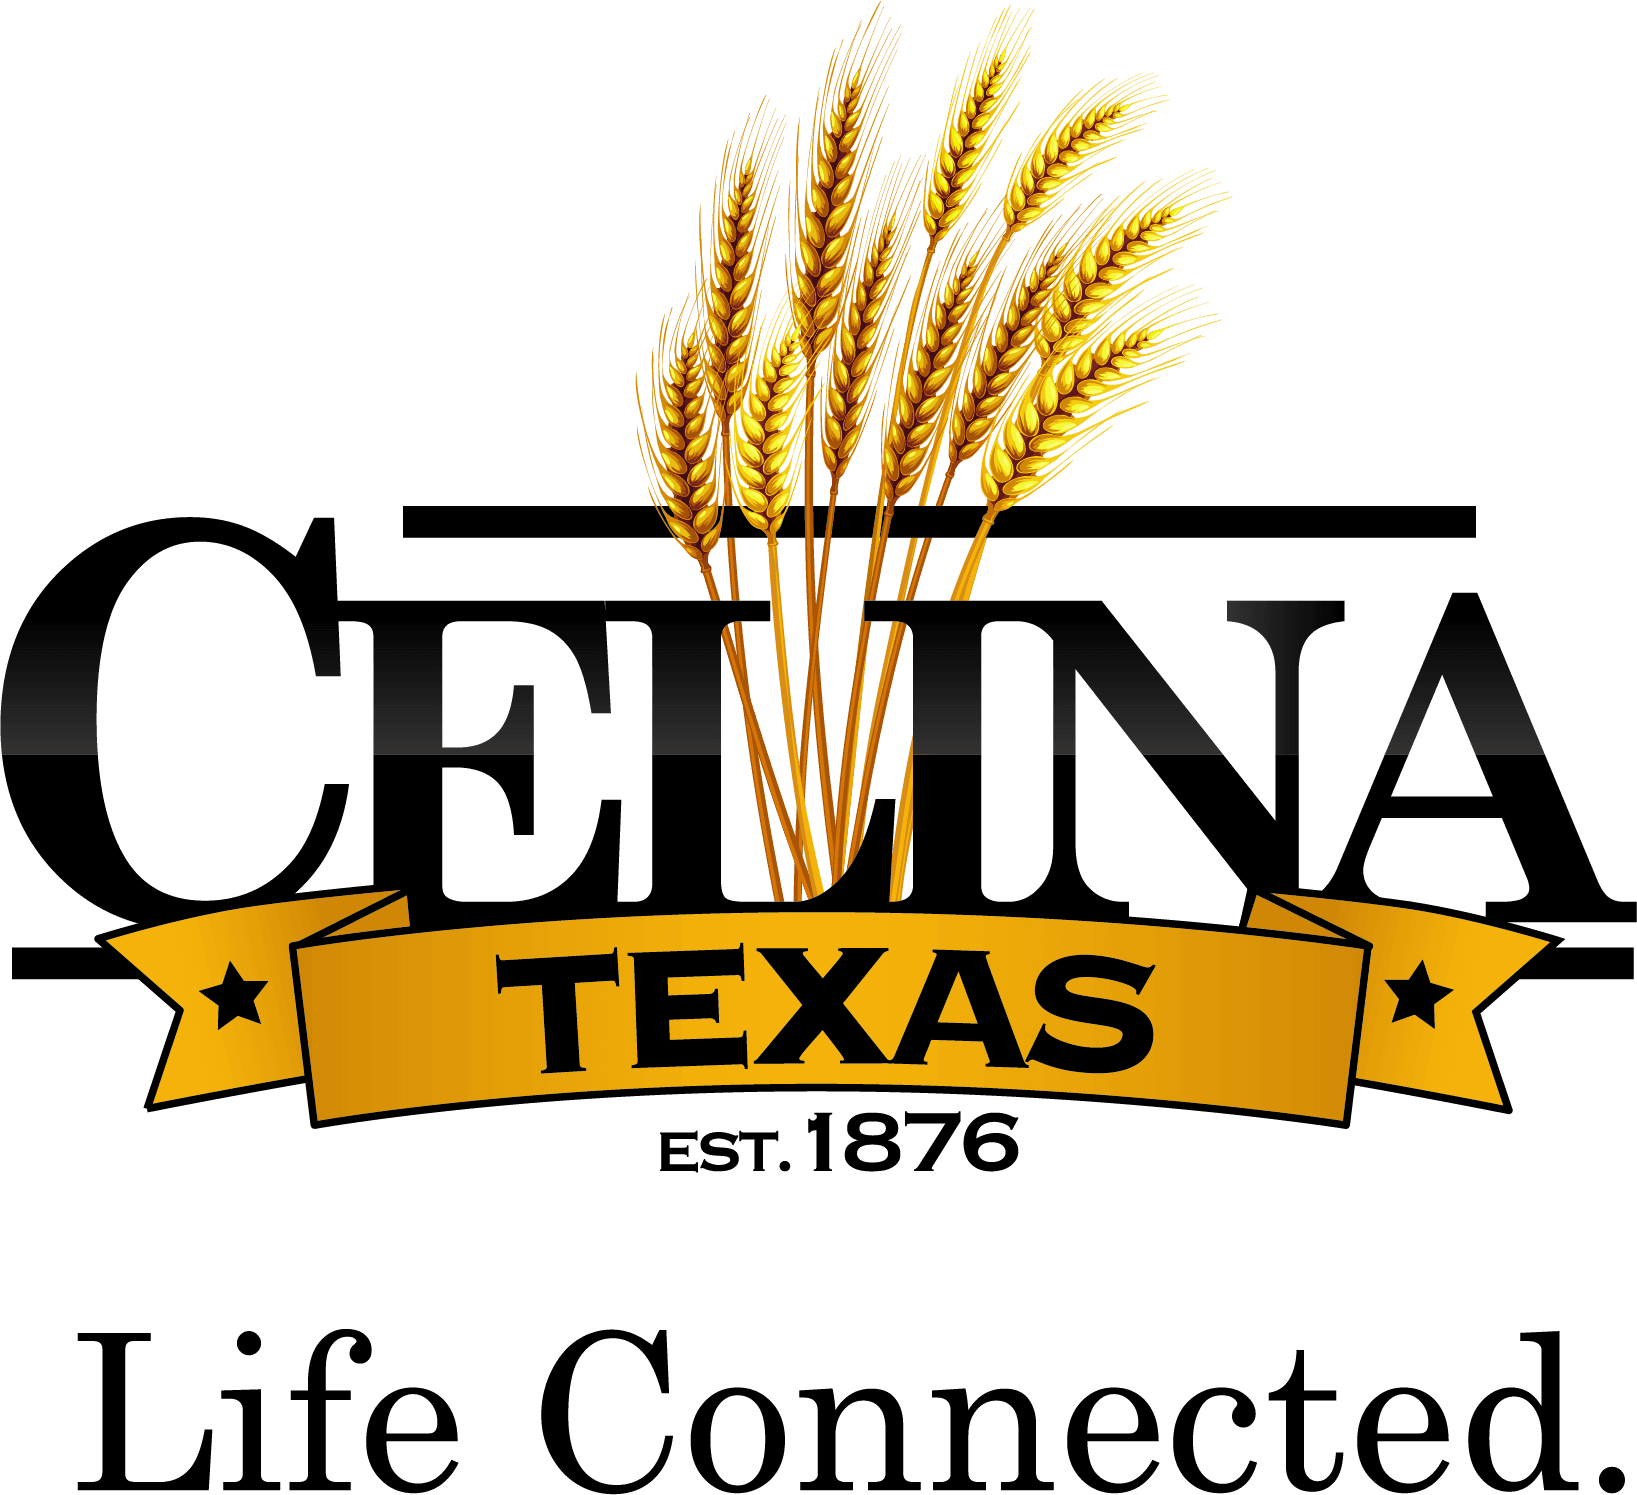 City of Celina Logo